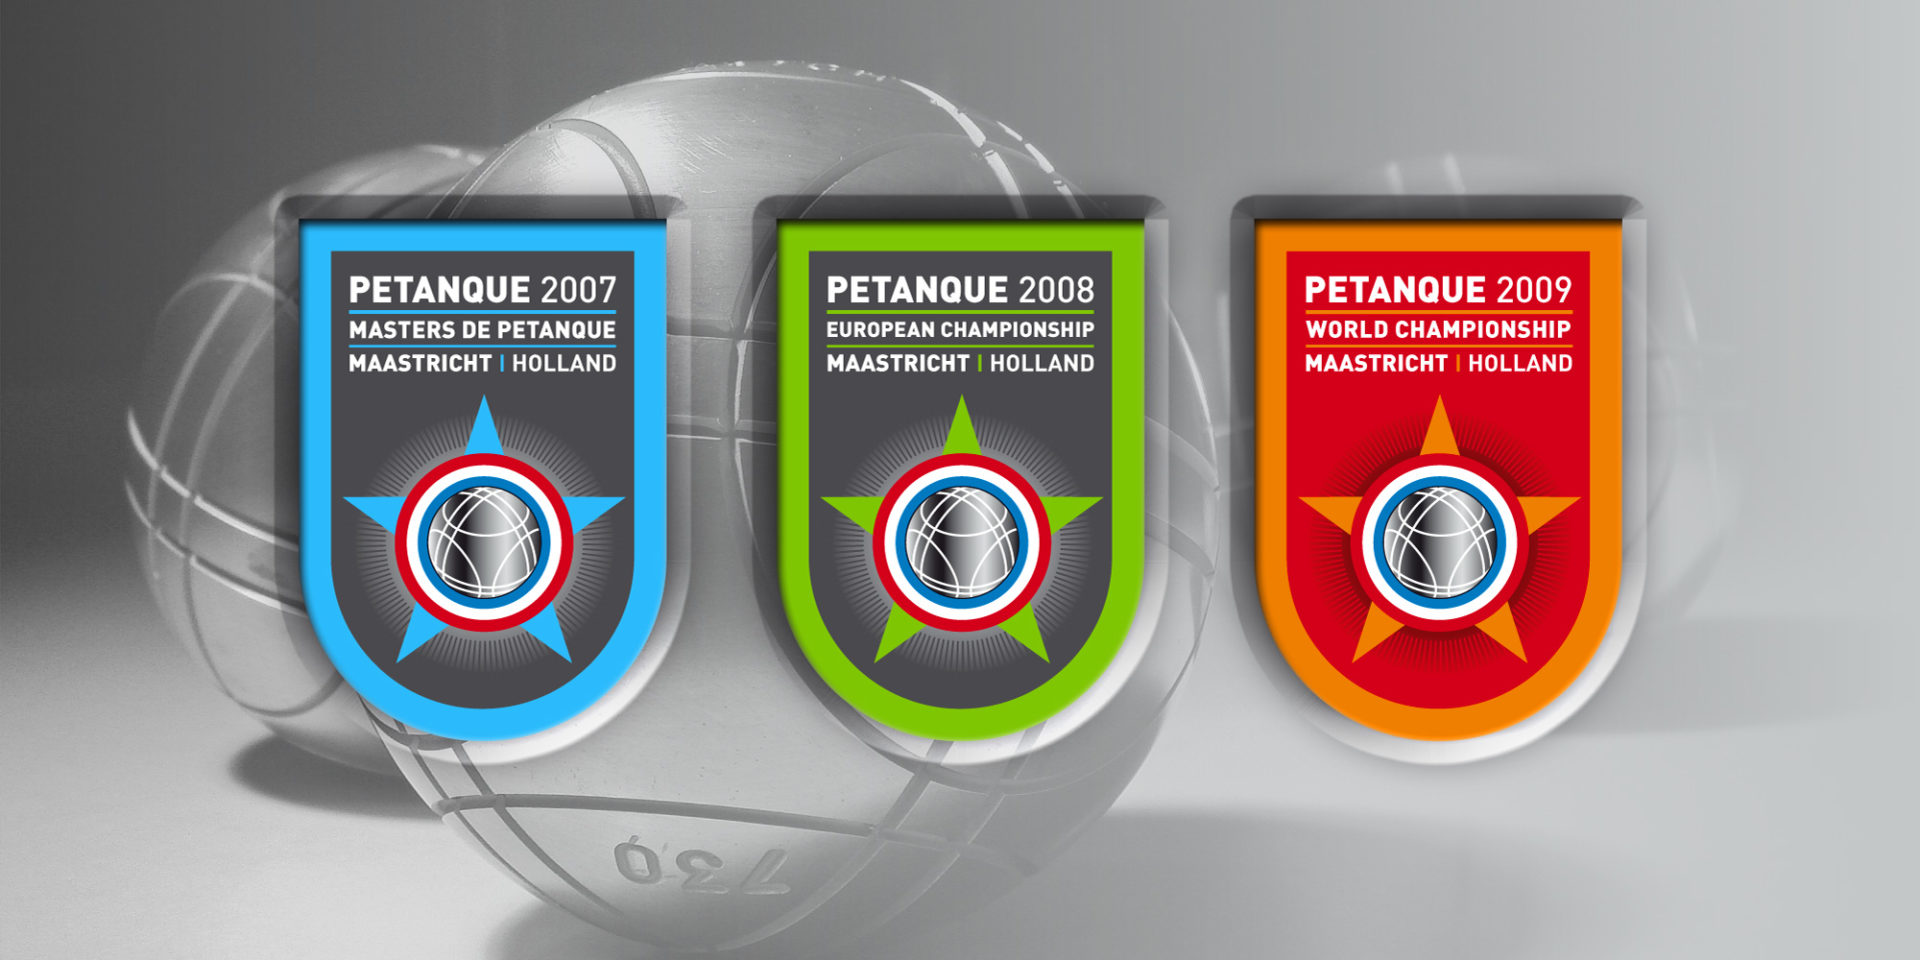 Petanque logo - Jeroen Borrenbergs)